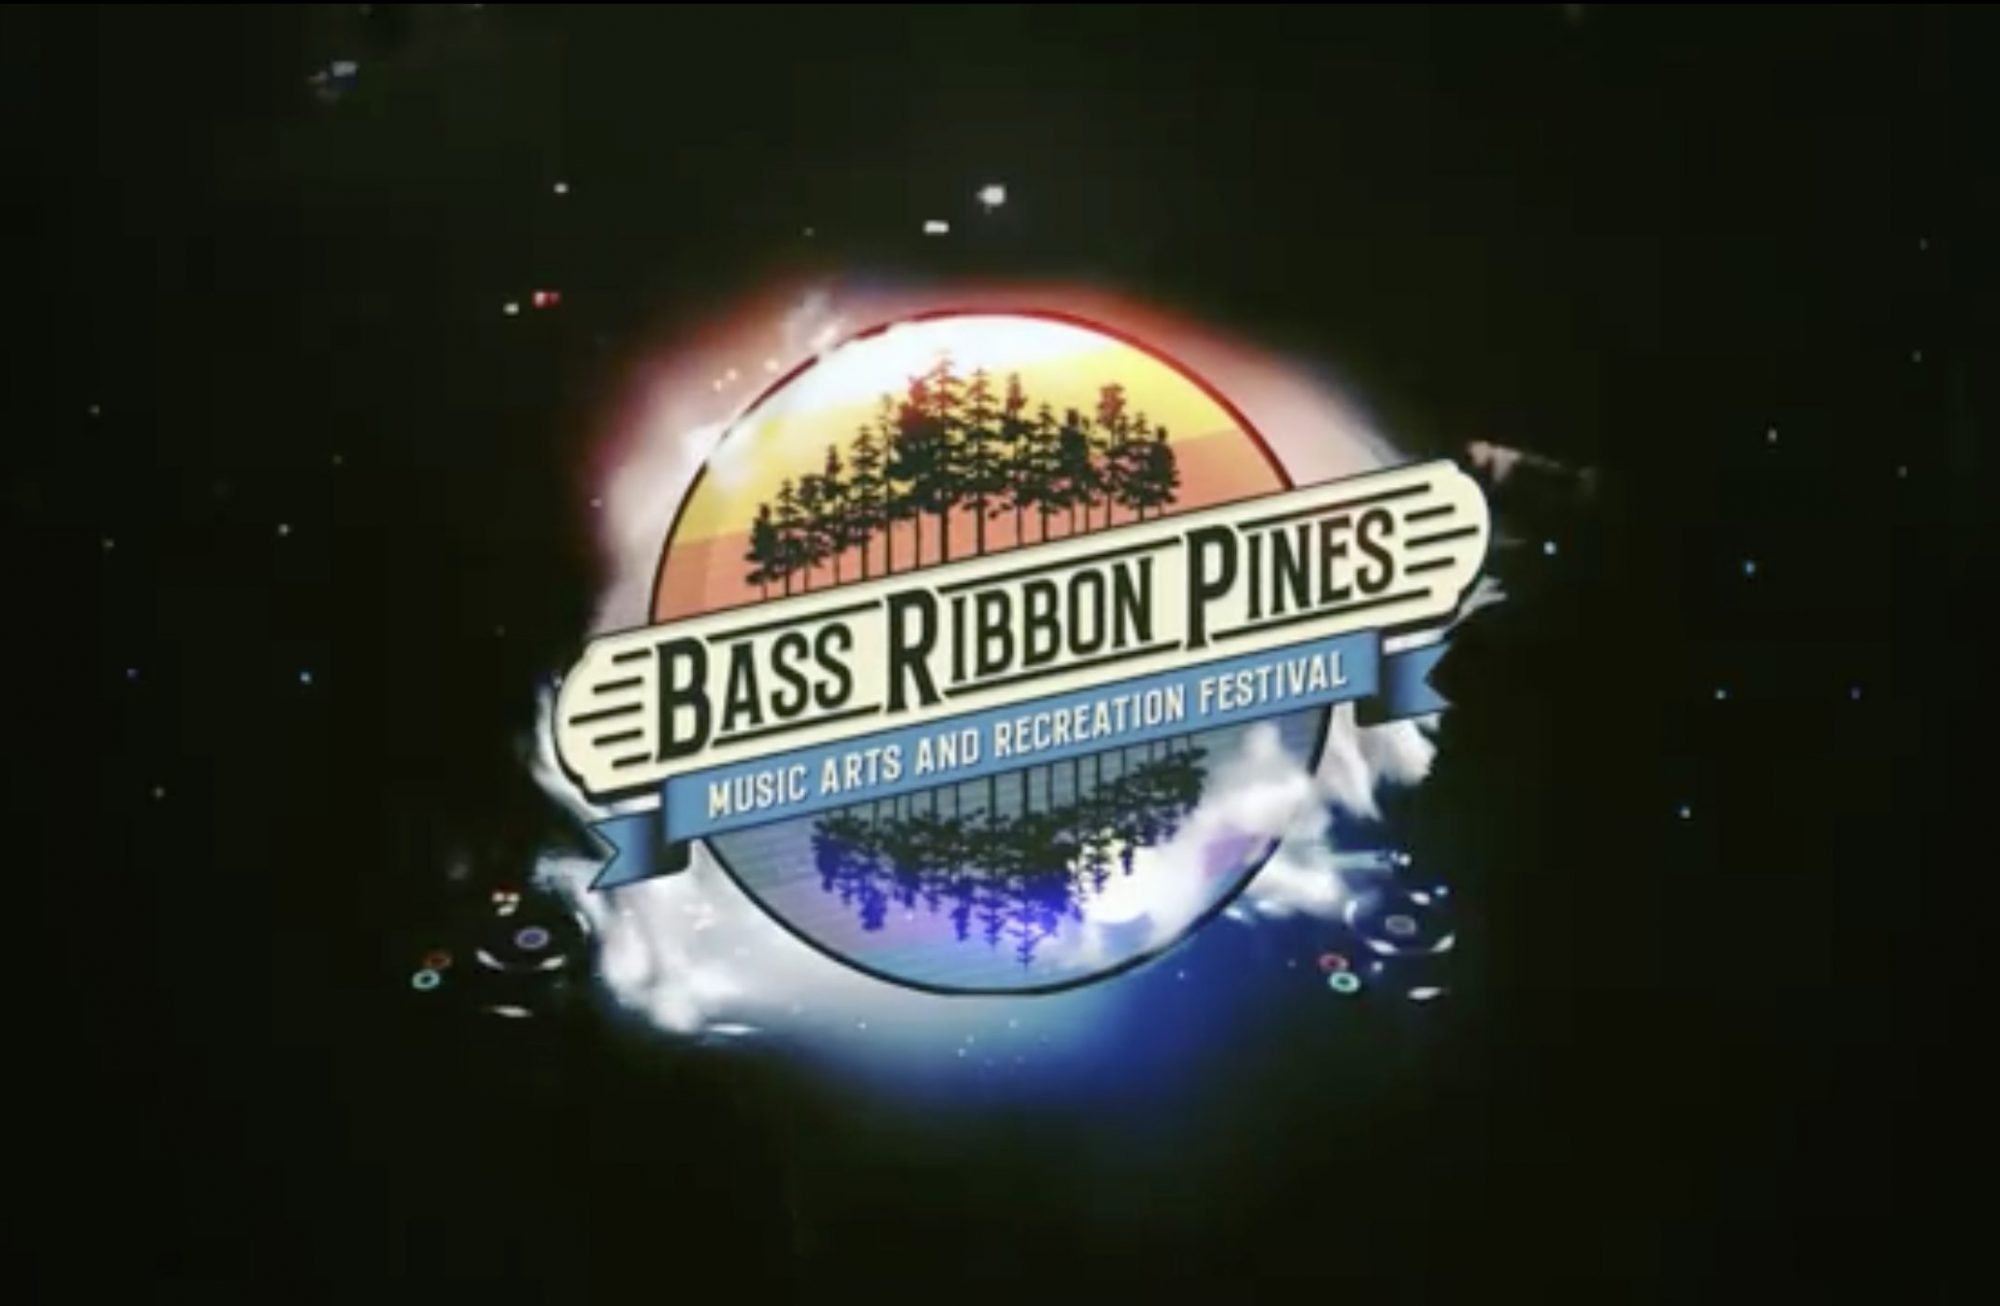 Bass Ribbon Pines Music Festival 2021